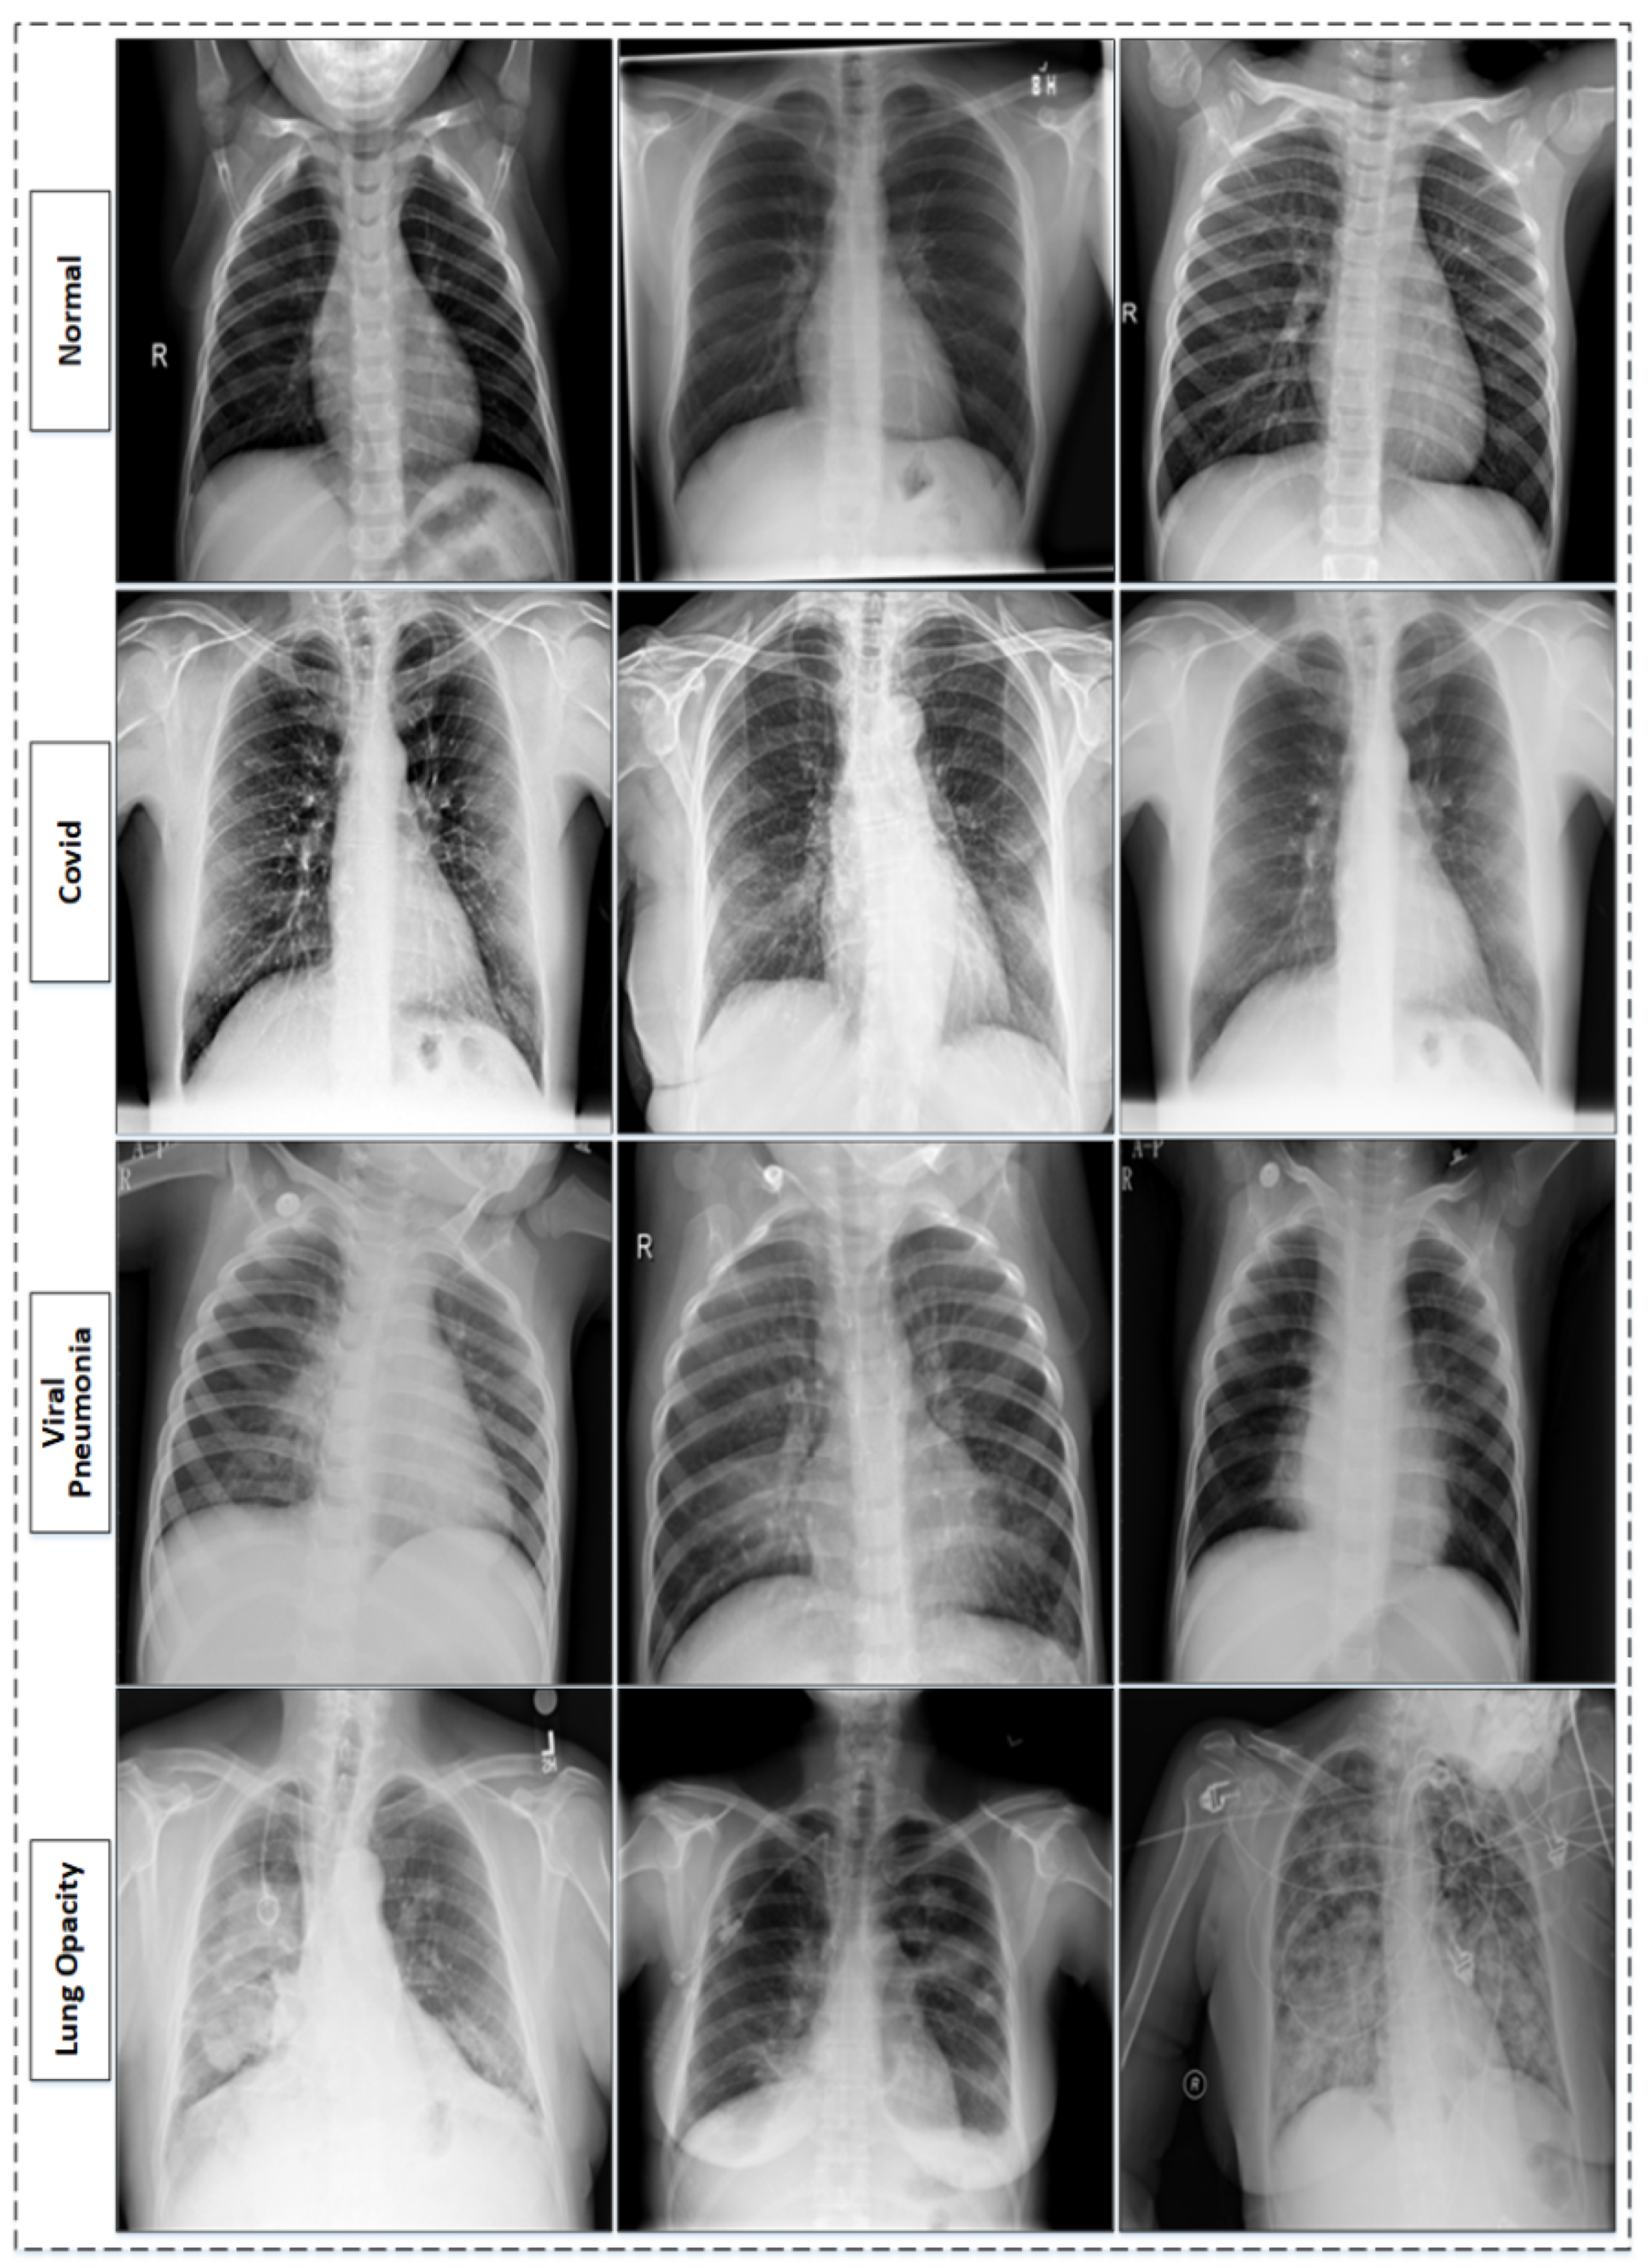 klebsiella pneumoniae x ray